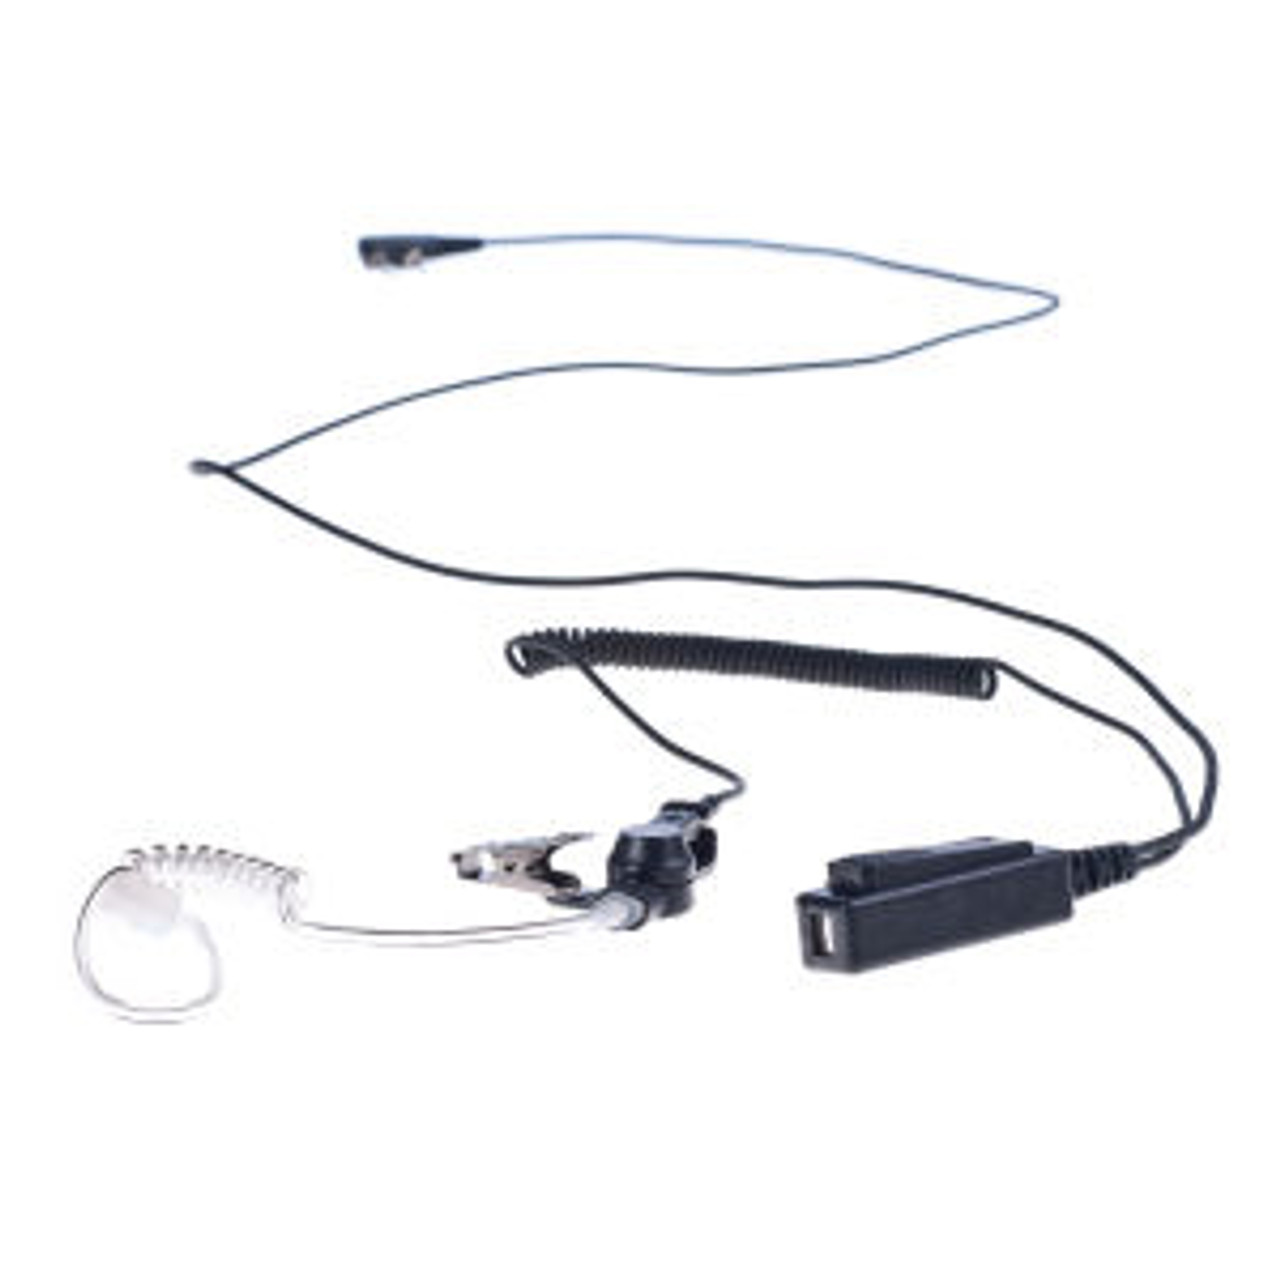 ICOM IC-F70 1-Wire Surveillance Kit